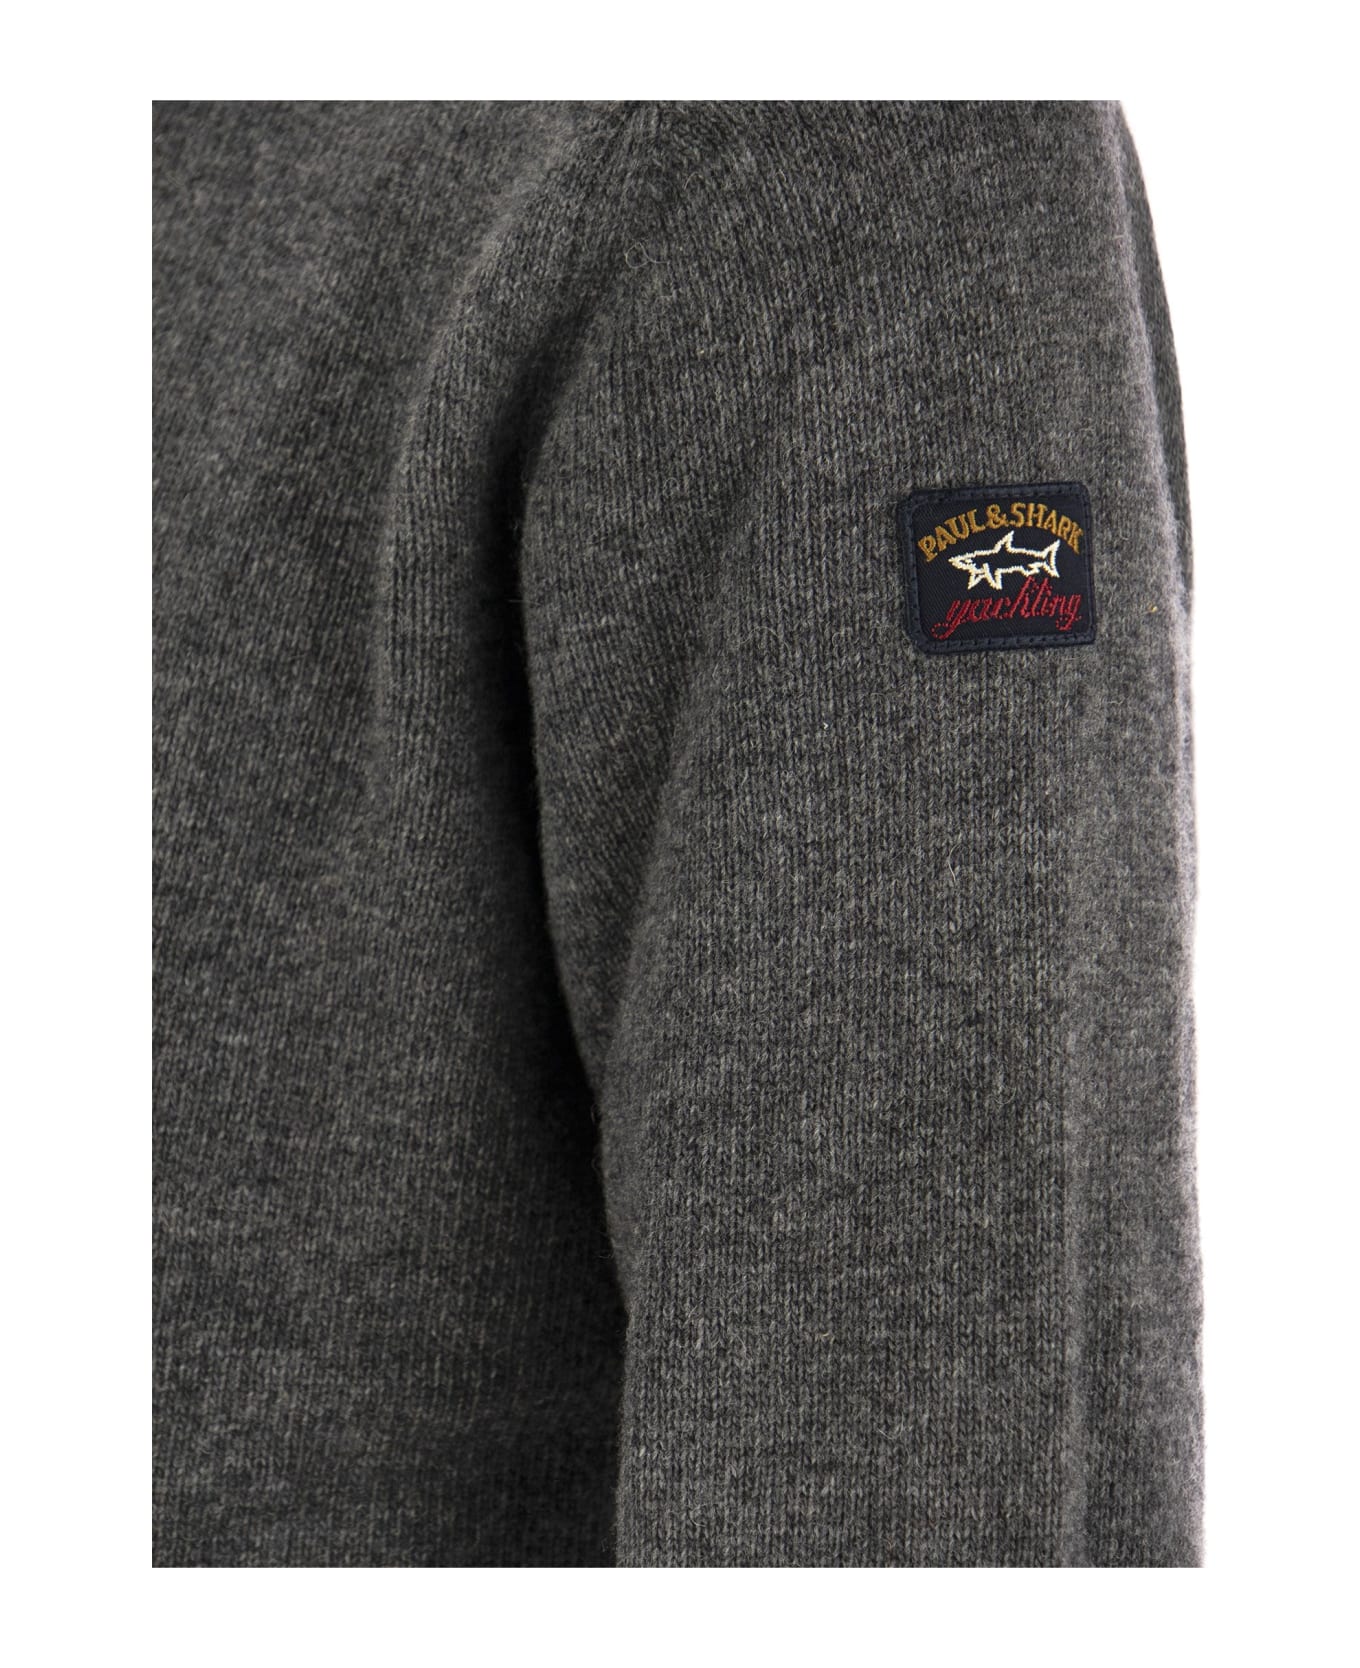 Paul&Shark Wool Crew Neck With Arm Patch Sweater - GRIGIO ニットウェア